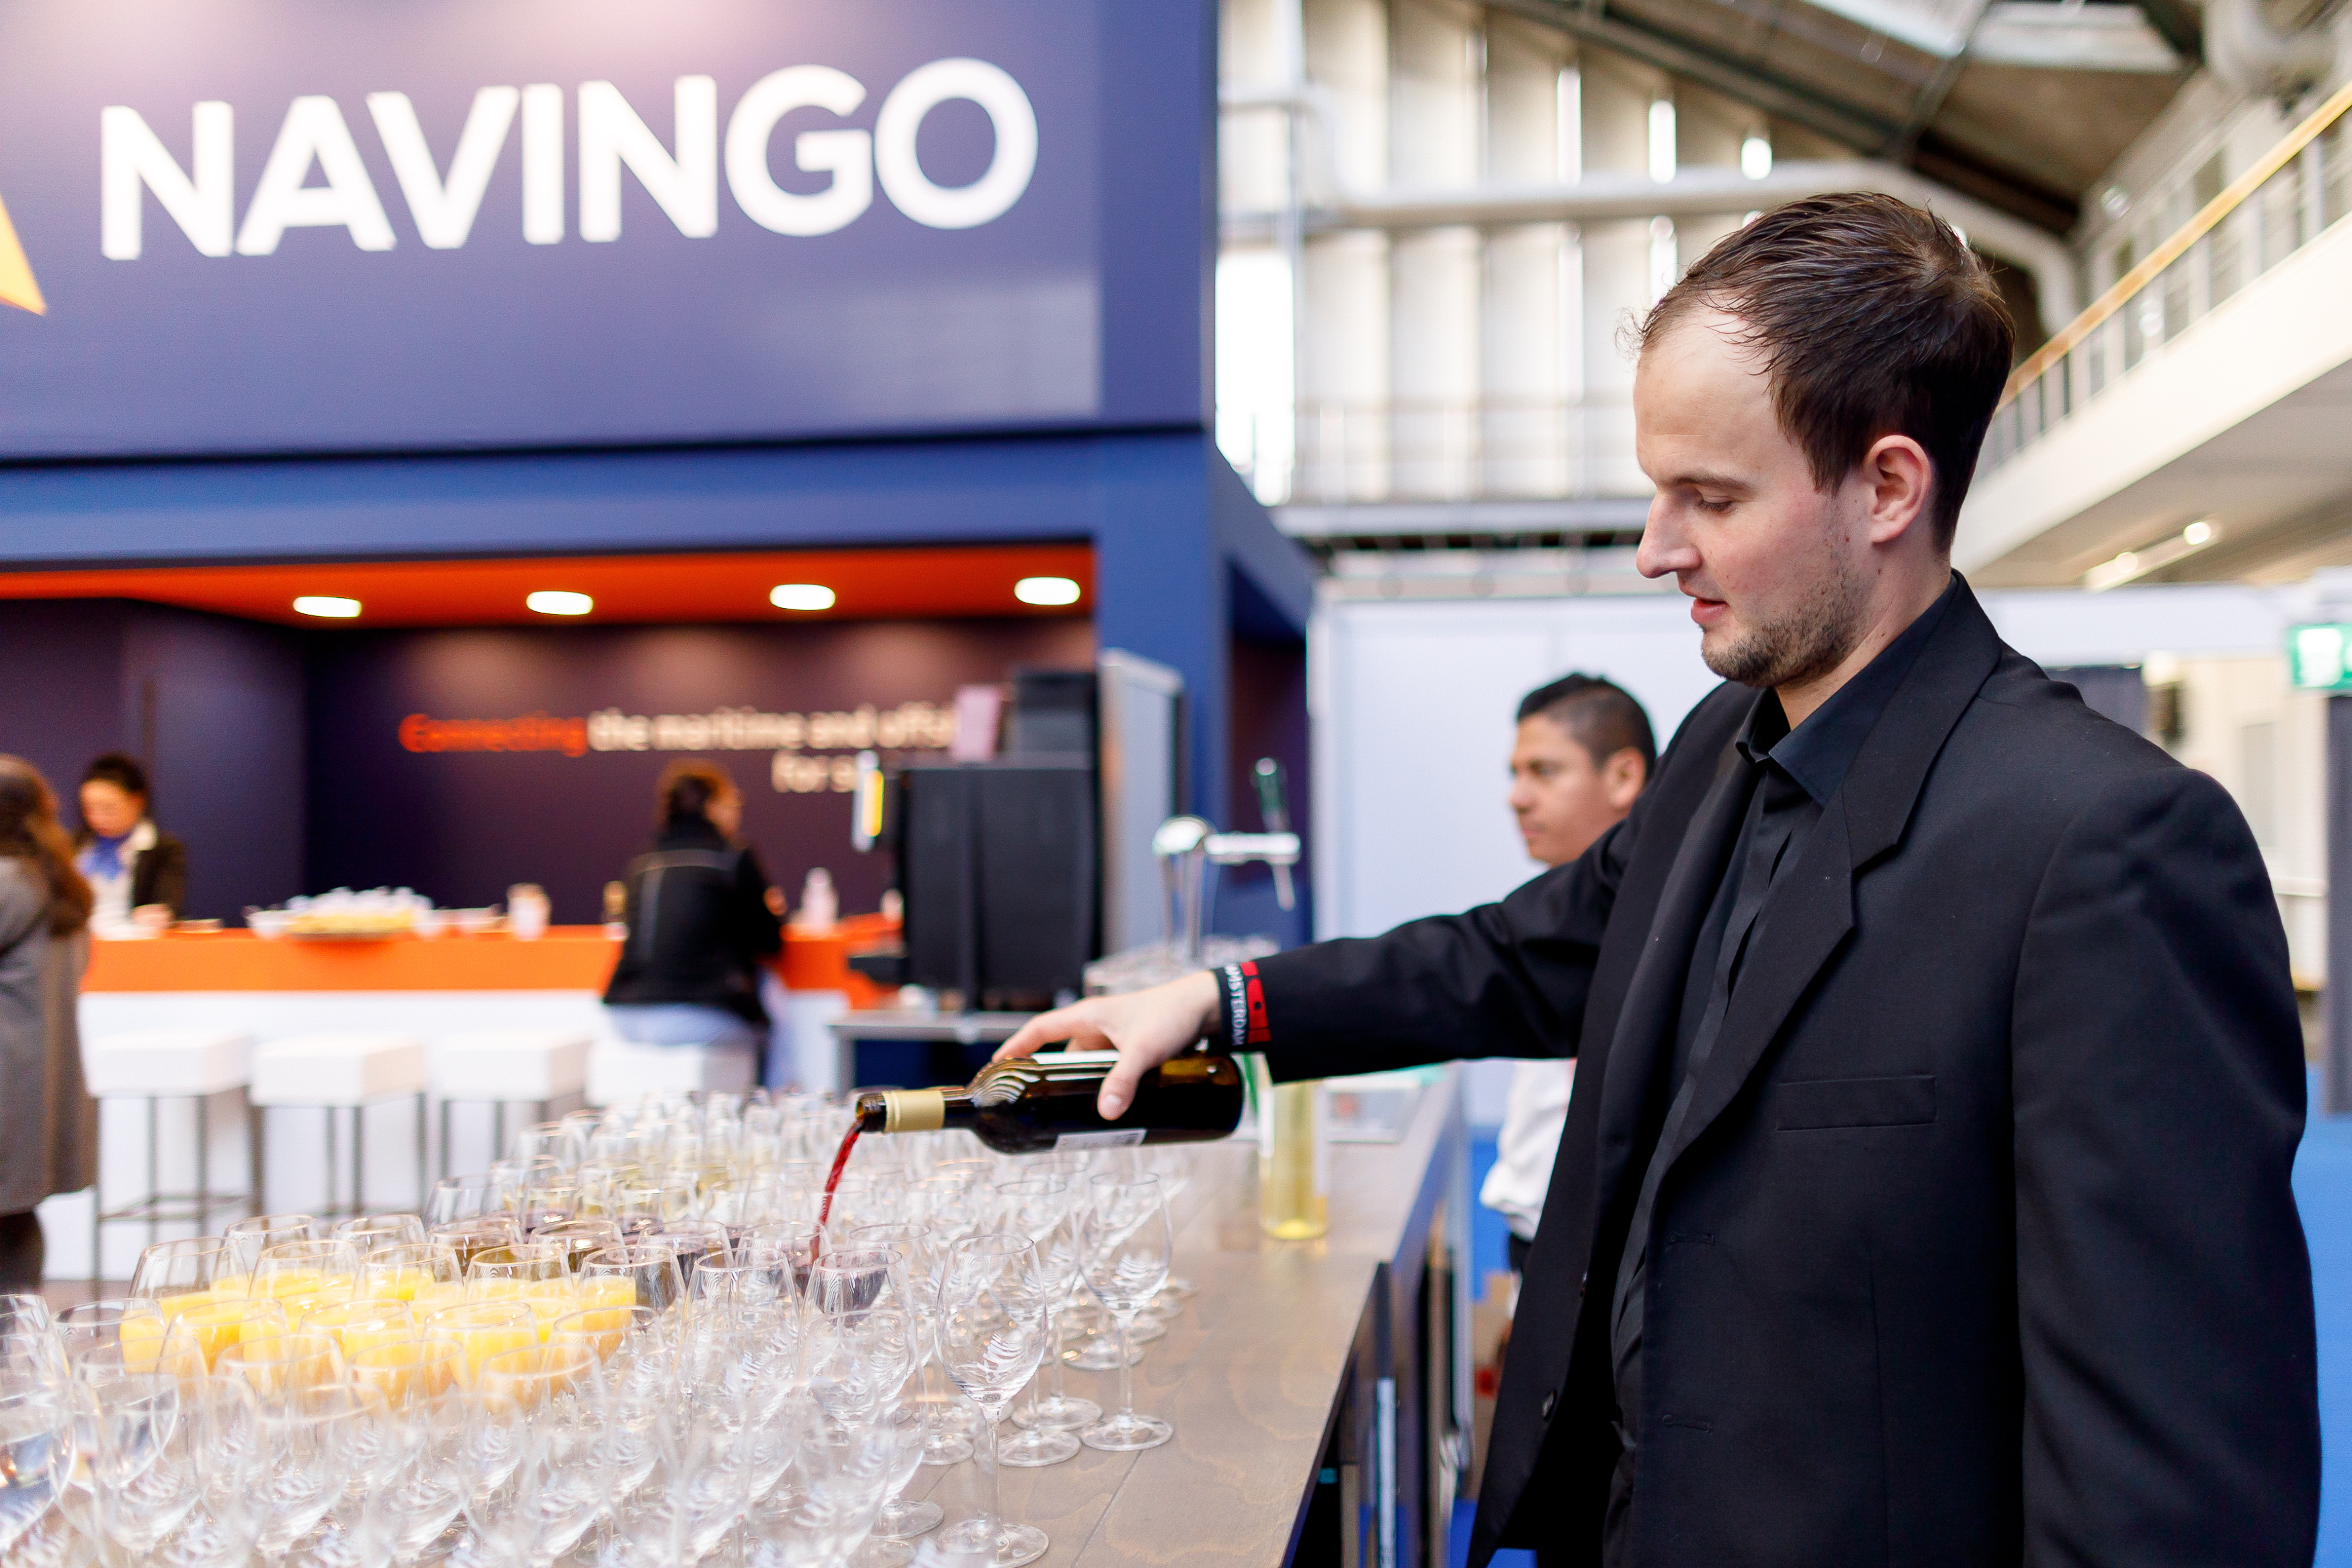 Taste a drop of OEEC spirit at Navingo's official closing drinks